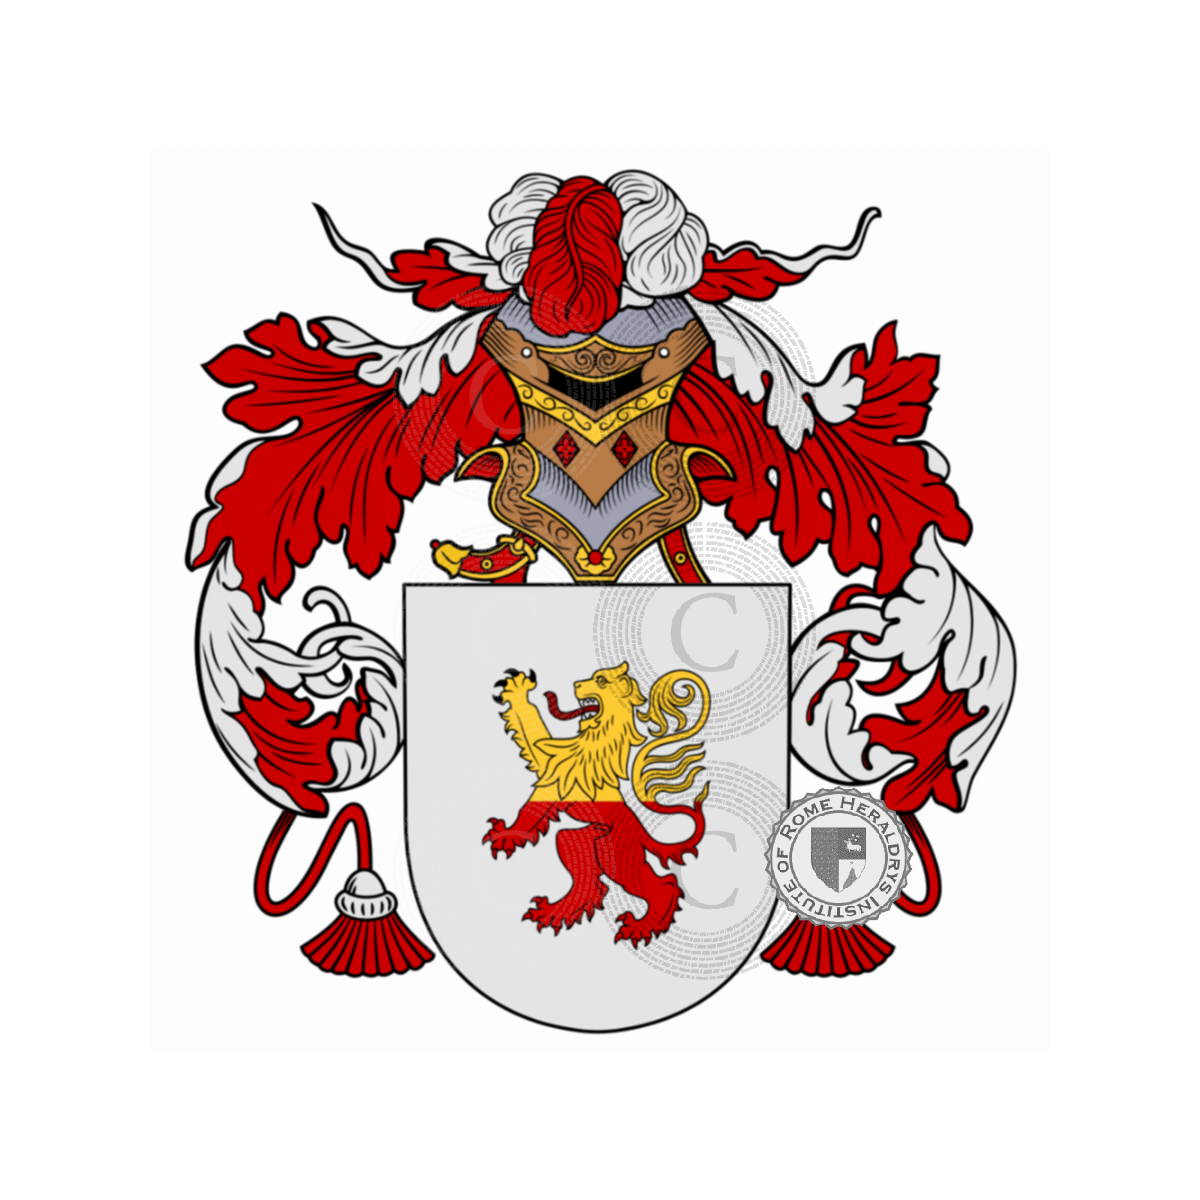 Escudo de la familiaQuadra, de la Quadra,della Quadra,Quadranti